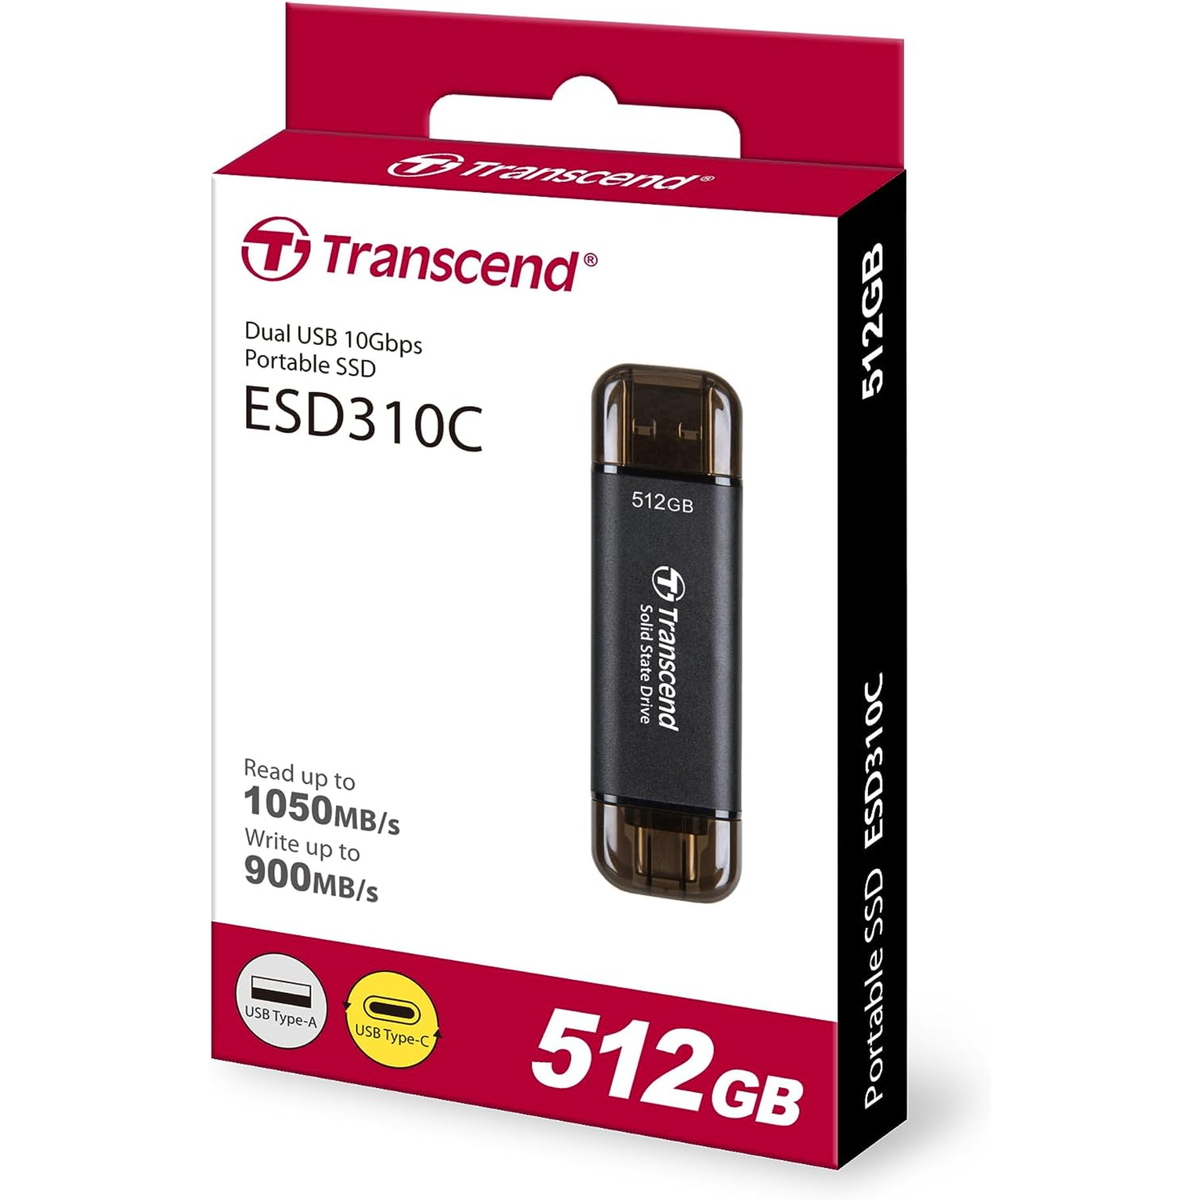 Transcend External SSD, 512 GB, Black, GESD310C